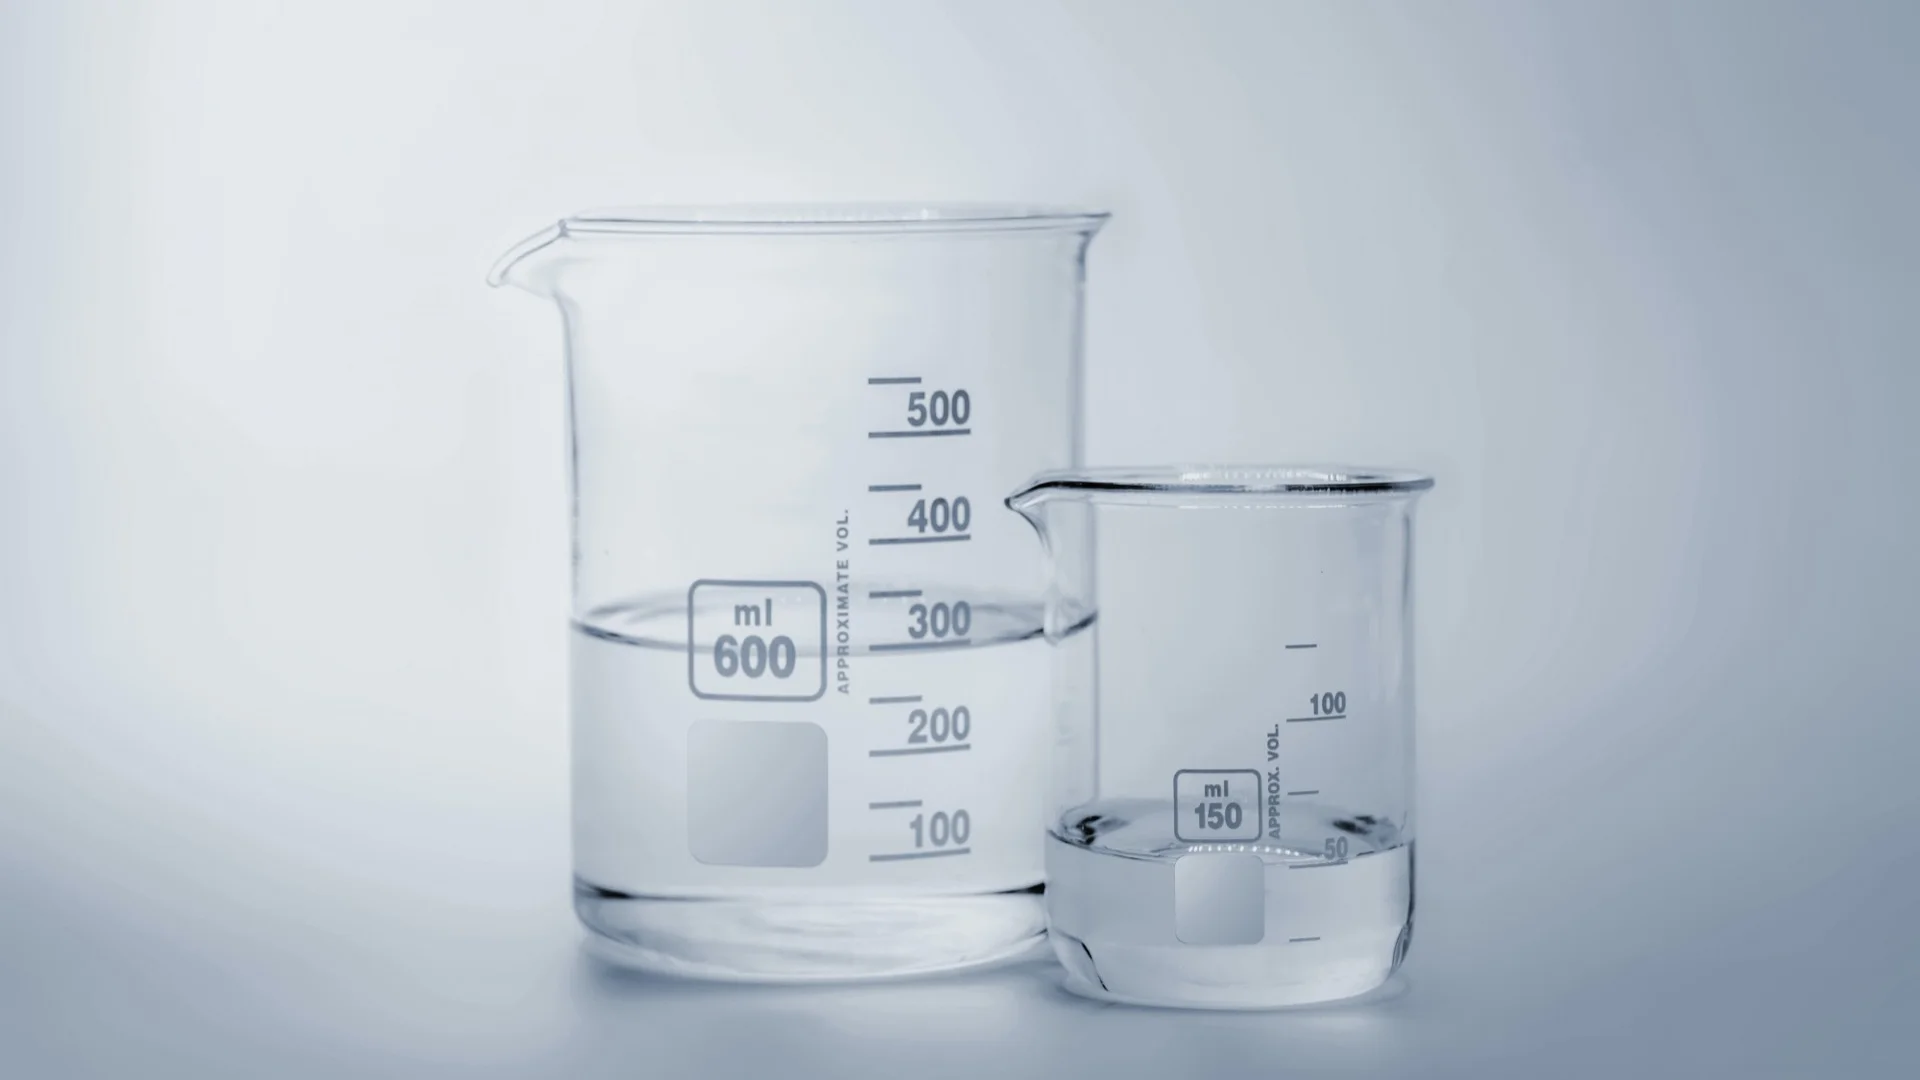 Tools and Techniques for Measuring Liquids